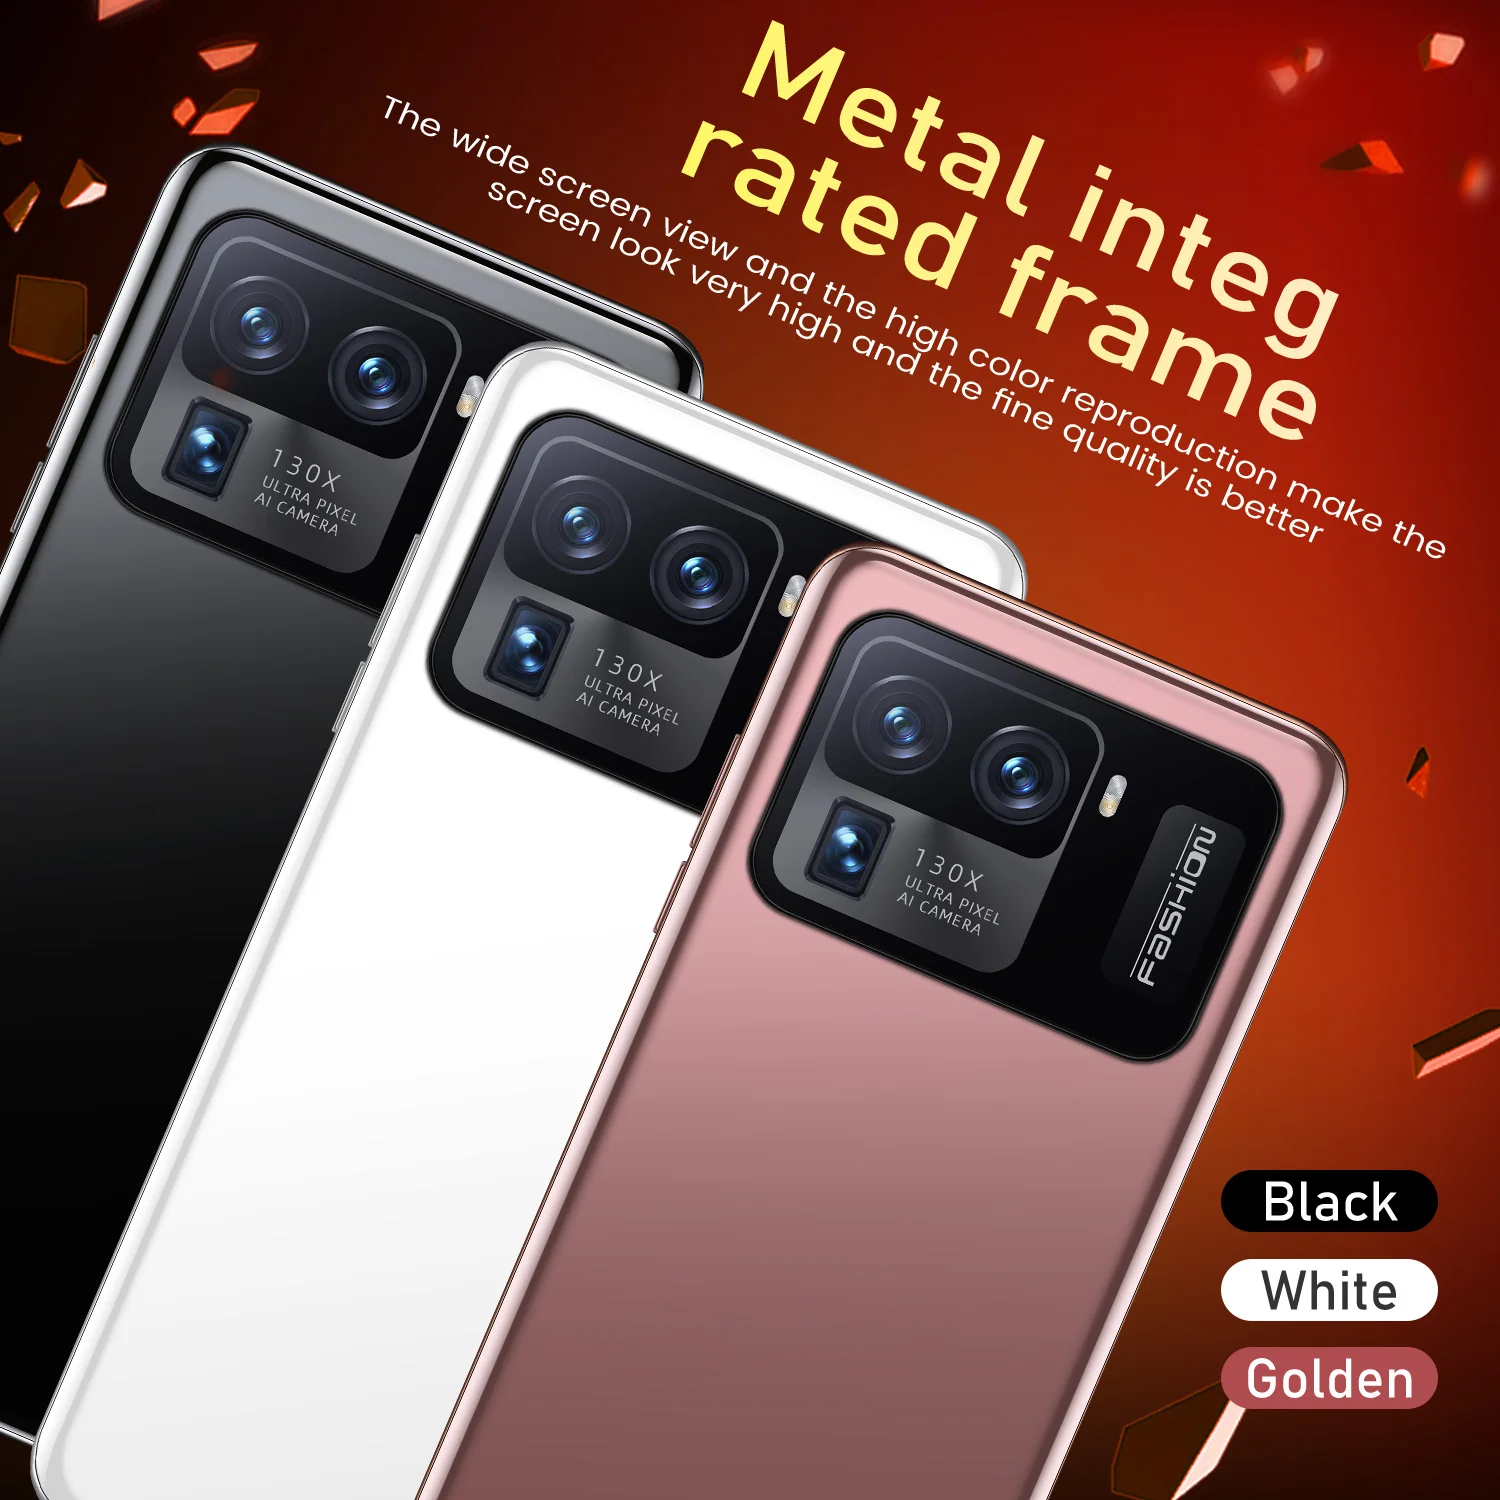 7.3 inch 5g smartphone | GoldYSofT Sale Online